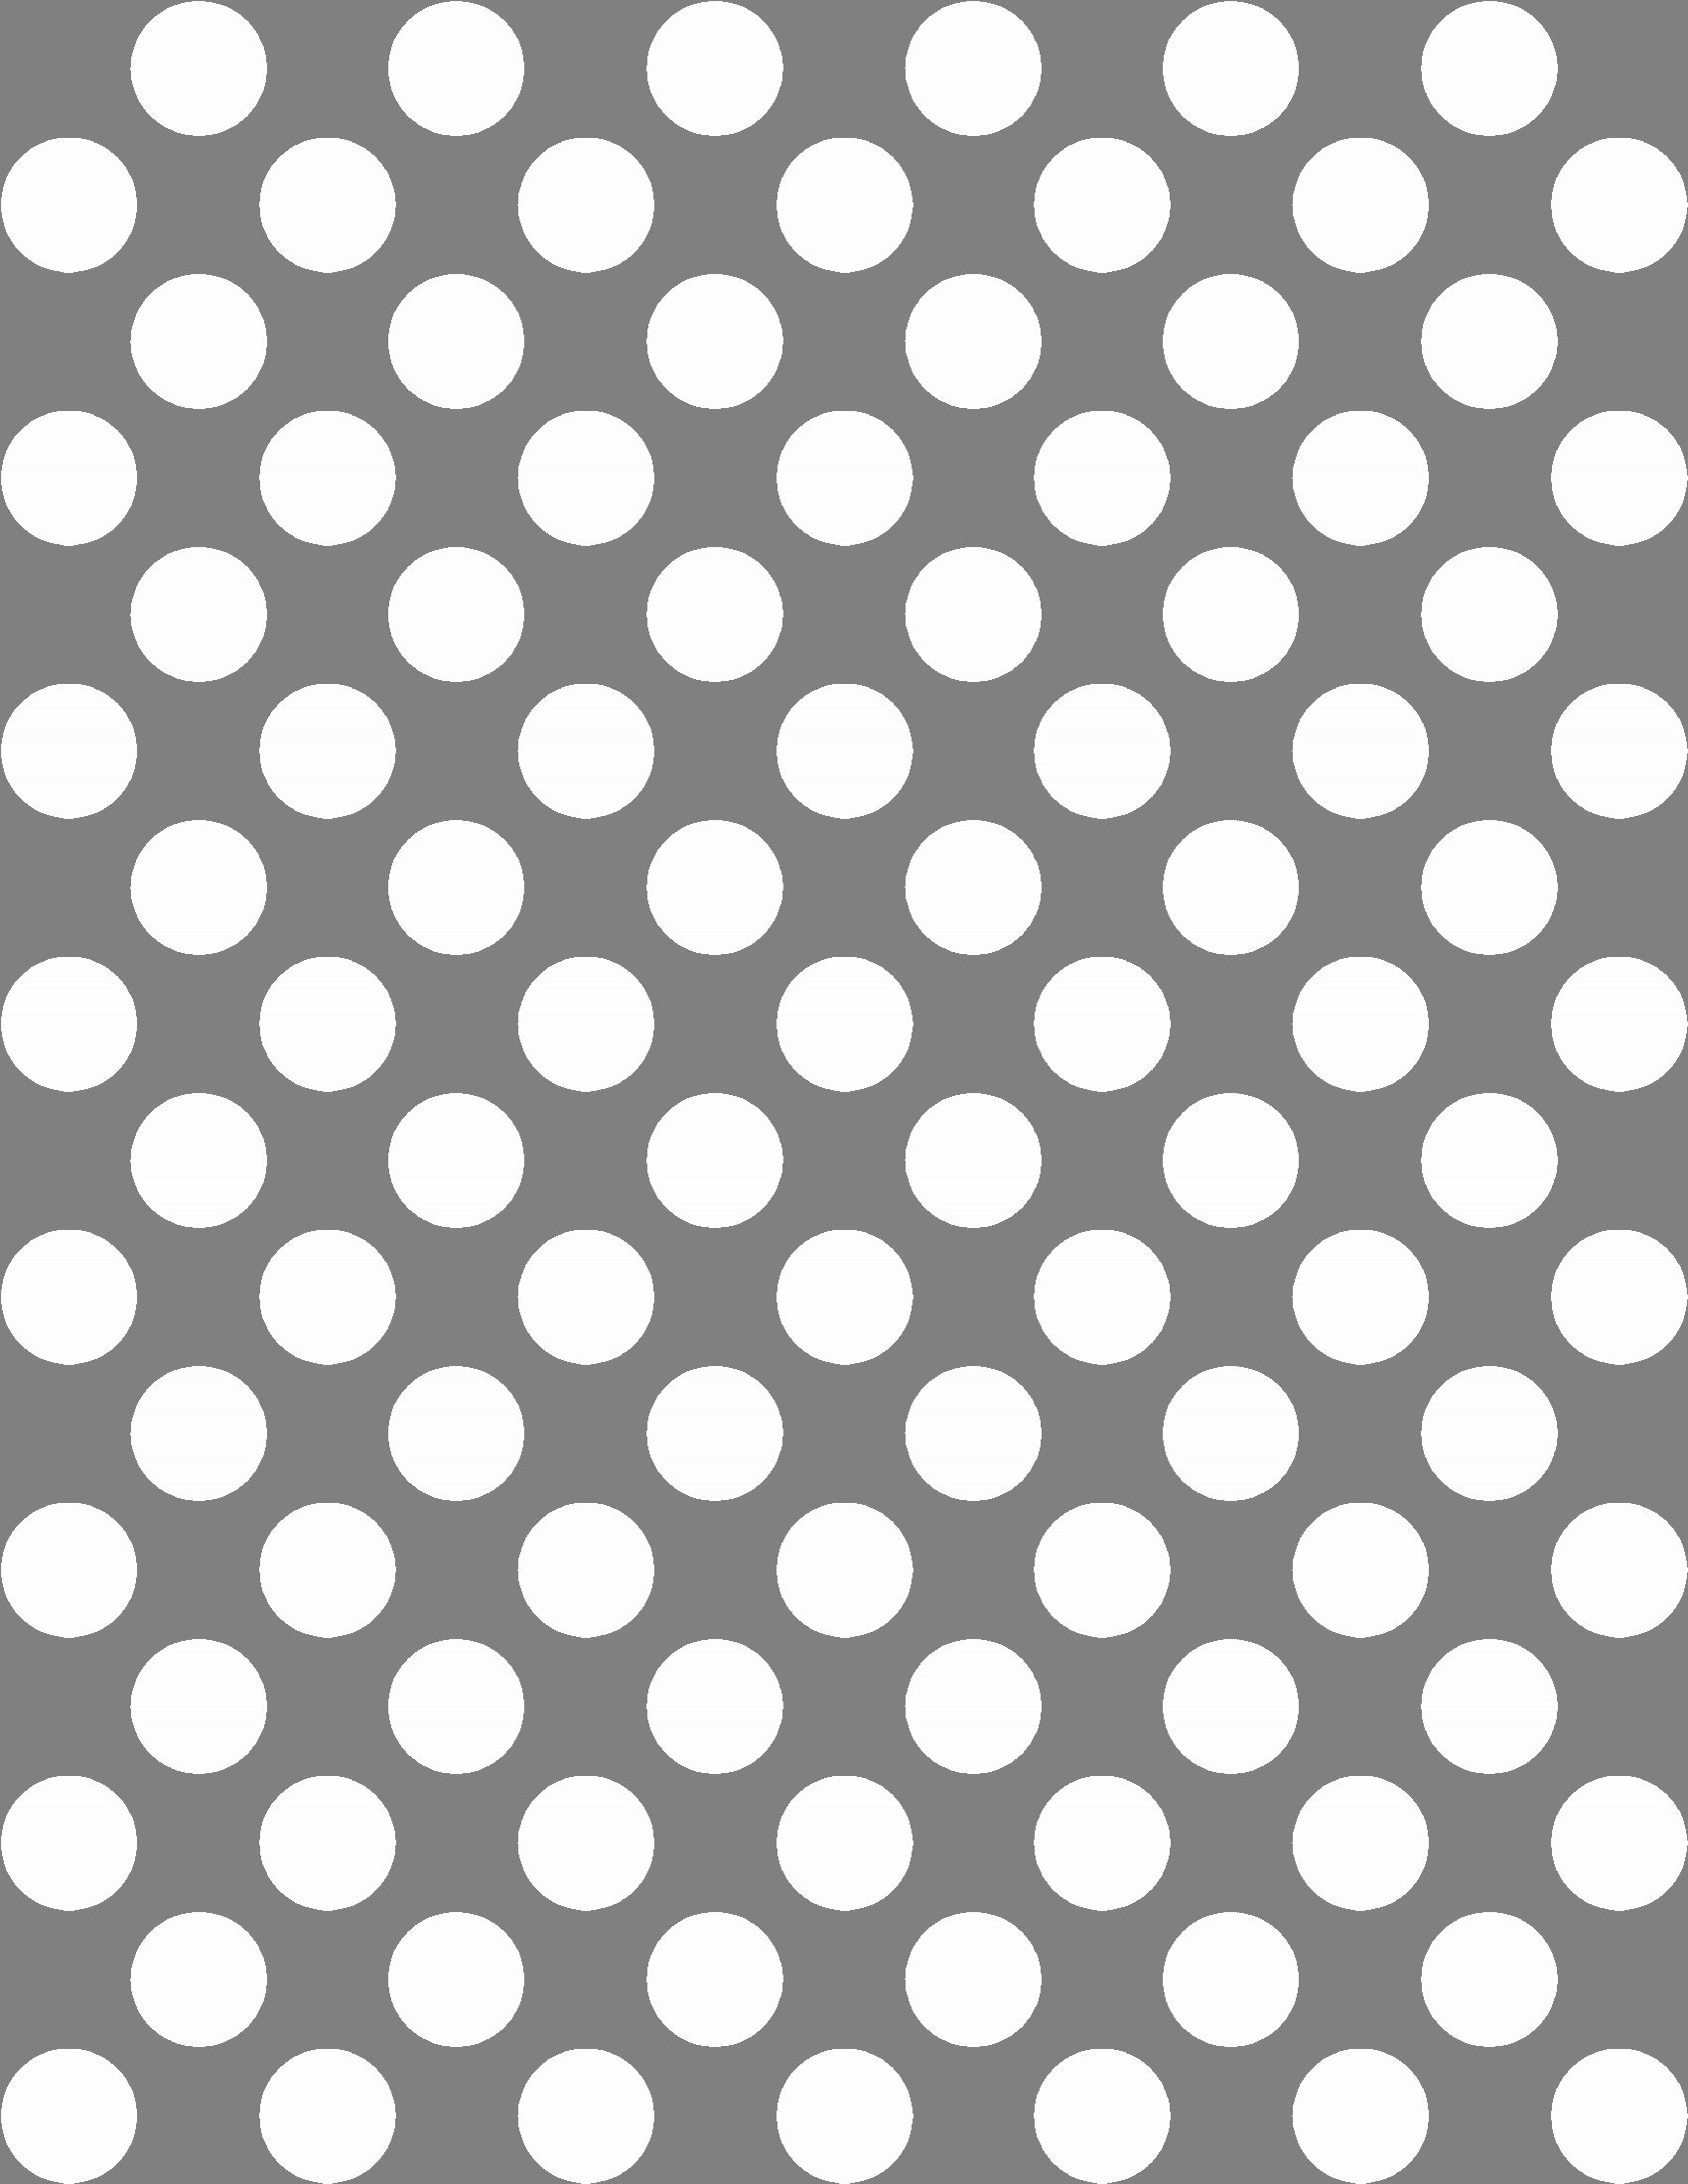 Polka Dot Background